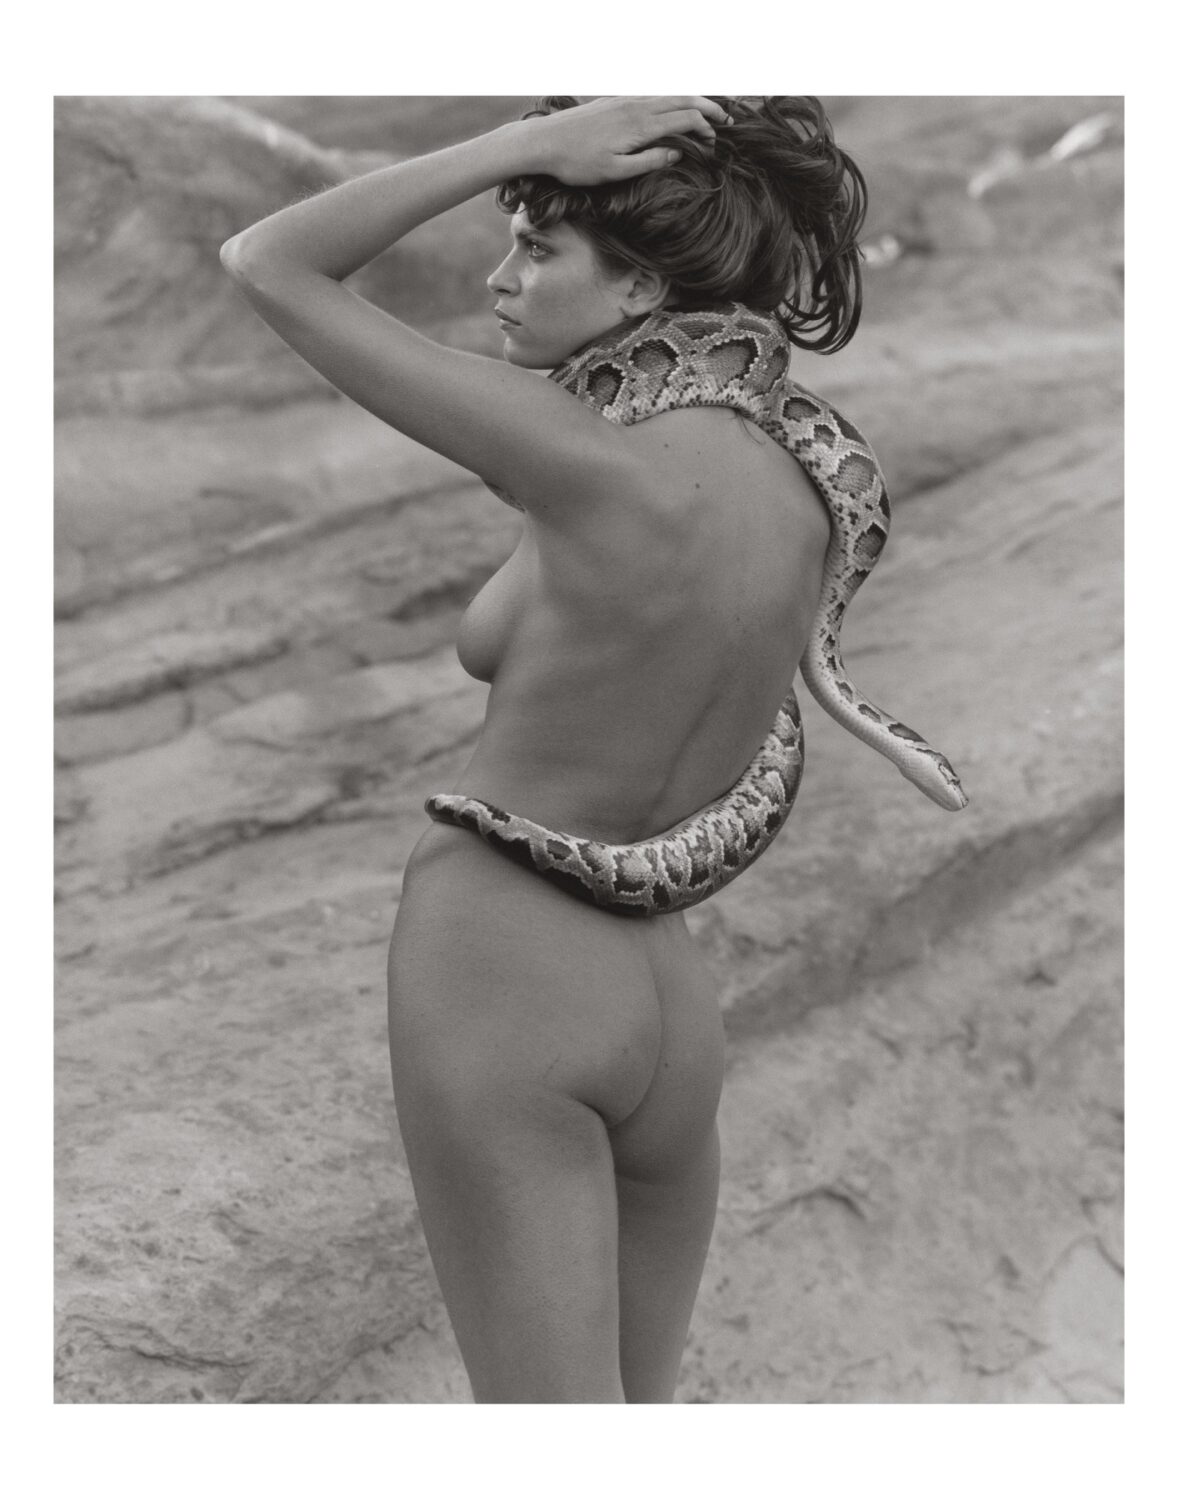 High Desert Art Fair Herb Ritts Frankie Rayder with Snake 1 Vasquez Rocks 2000 Silver Gelatin Photograph Courtesy of Fahey Klein Gallery